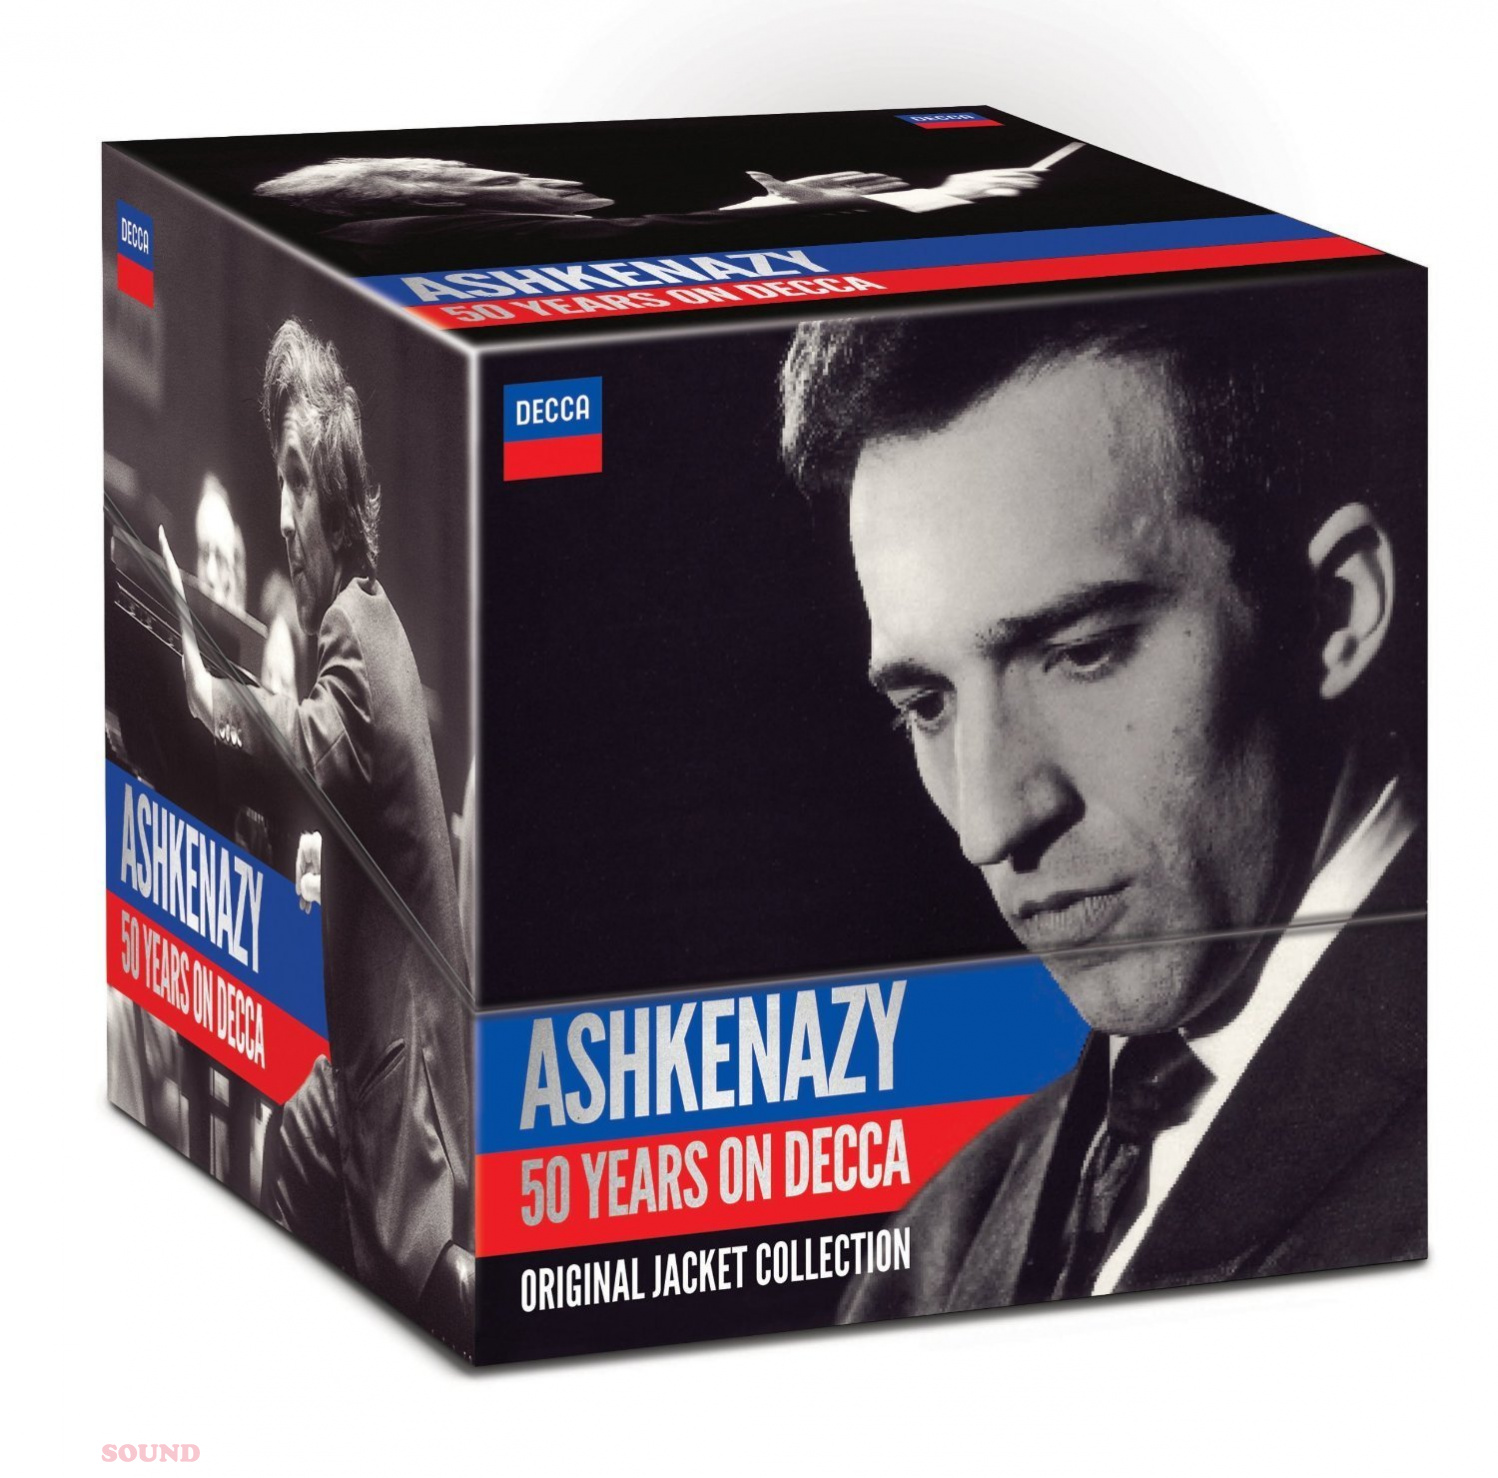 Ashkenazy 50 years on Decca peruennicaragua.com.ni